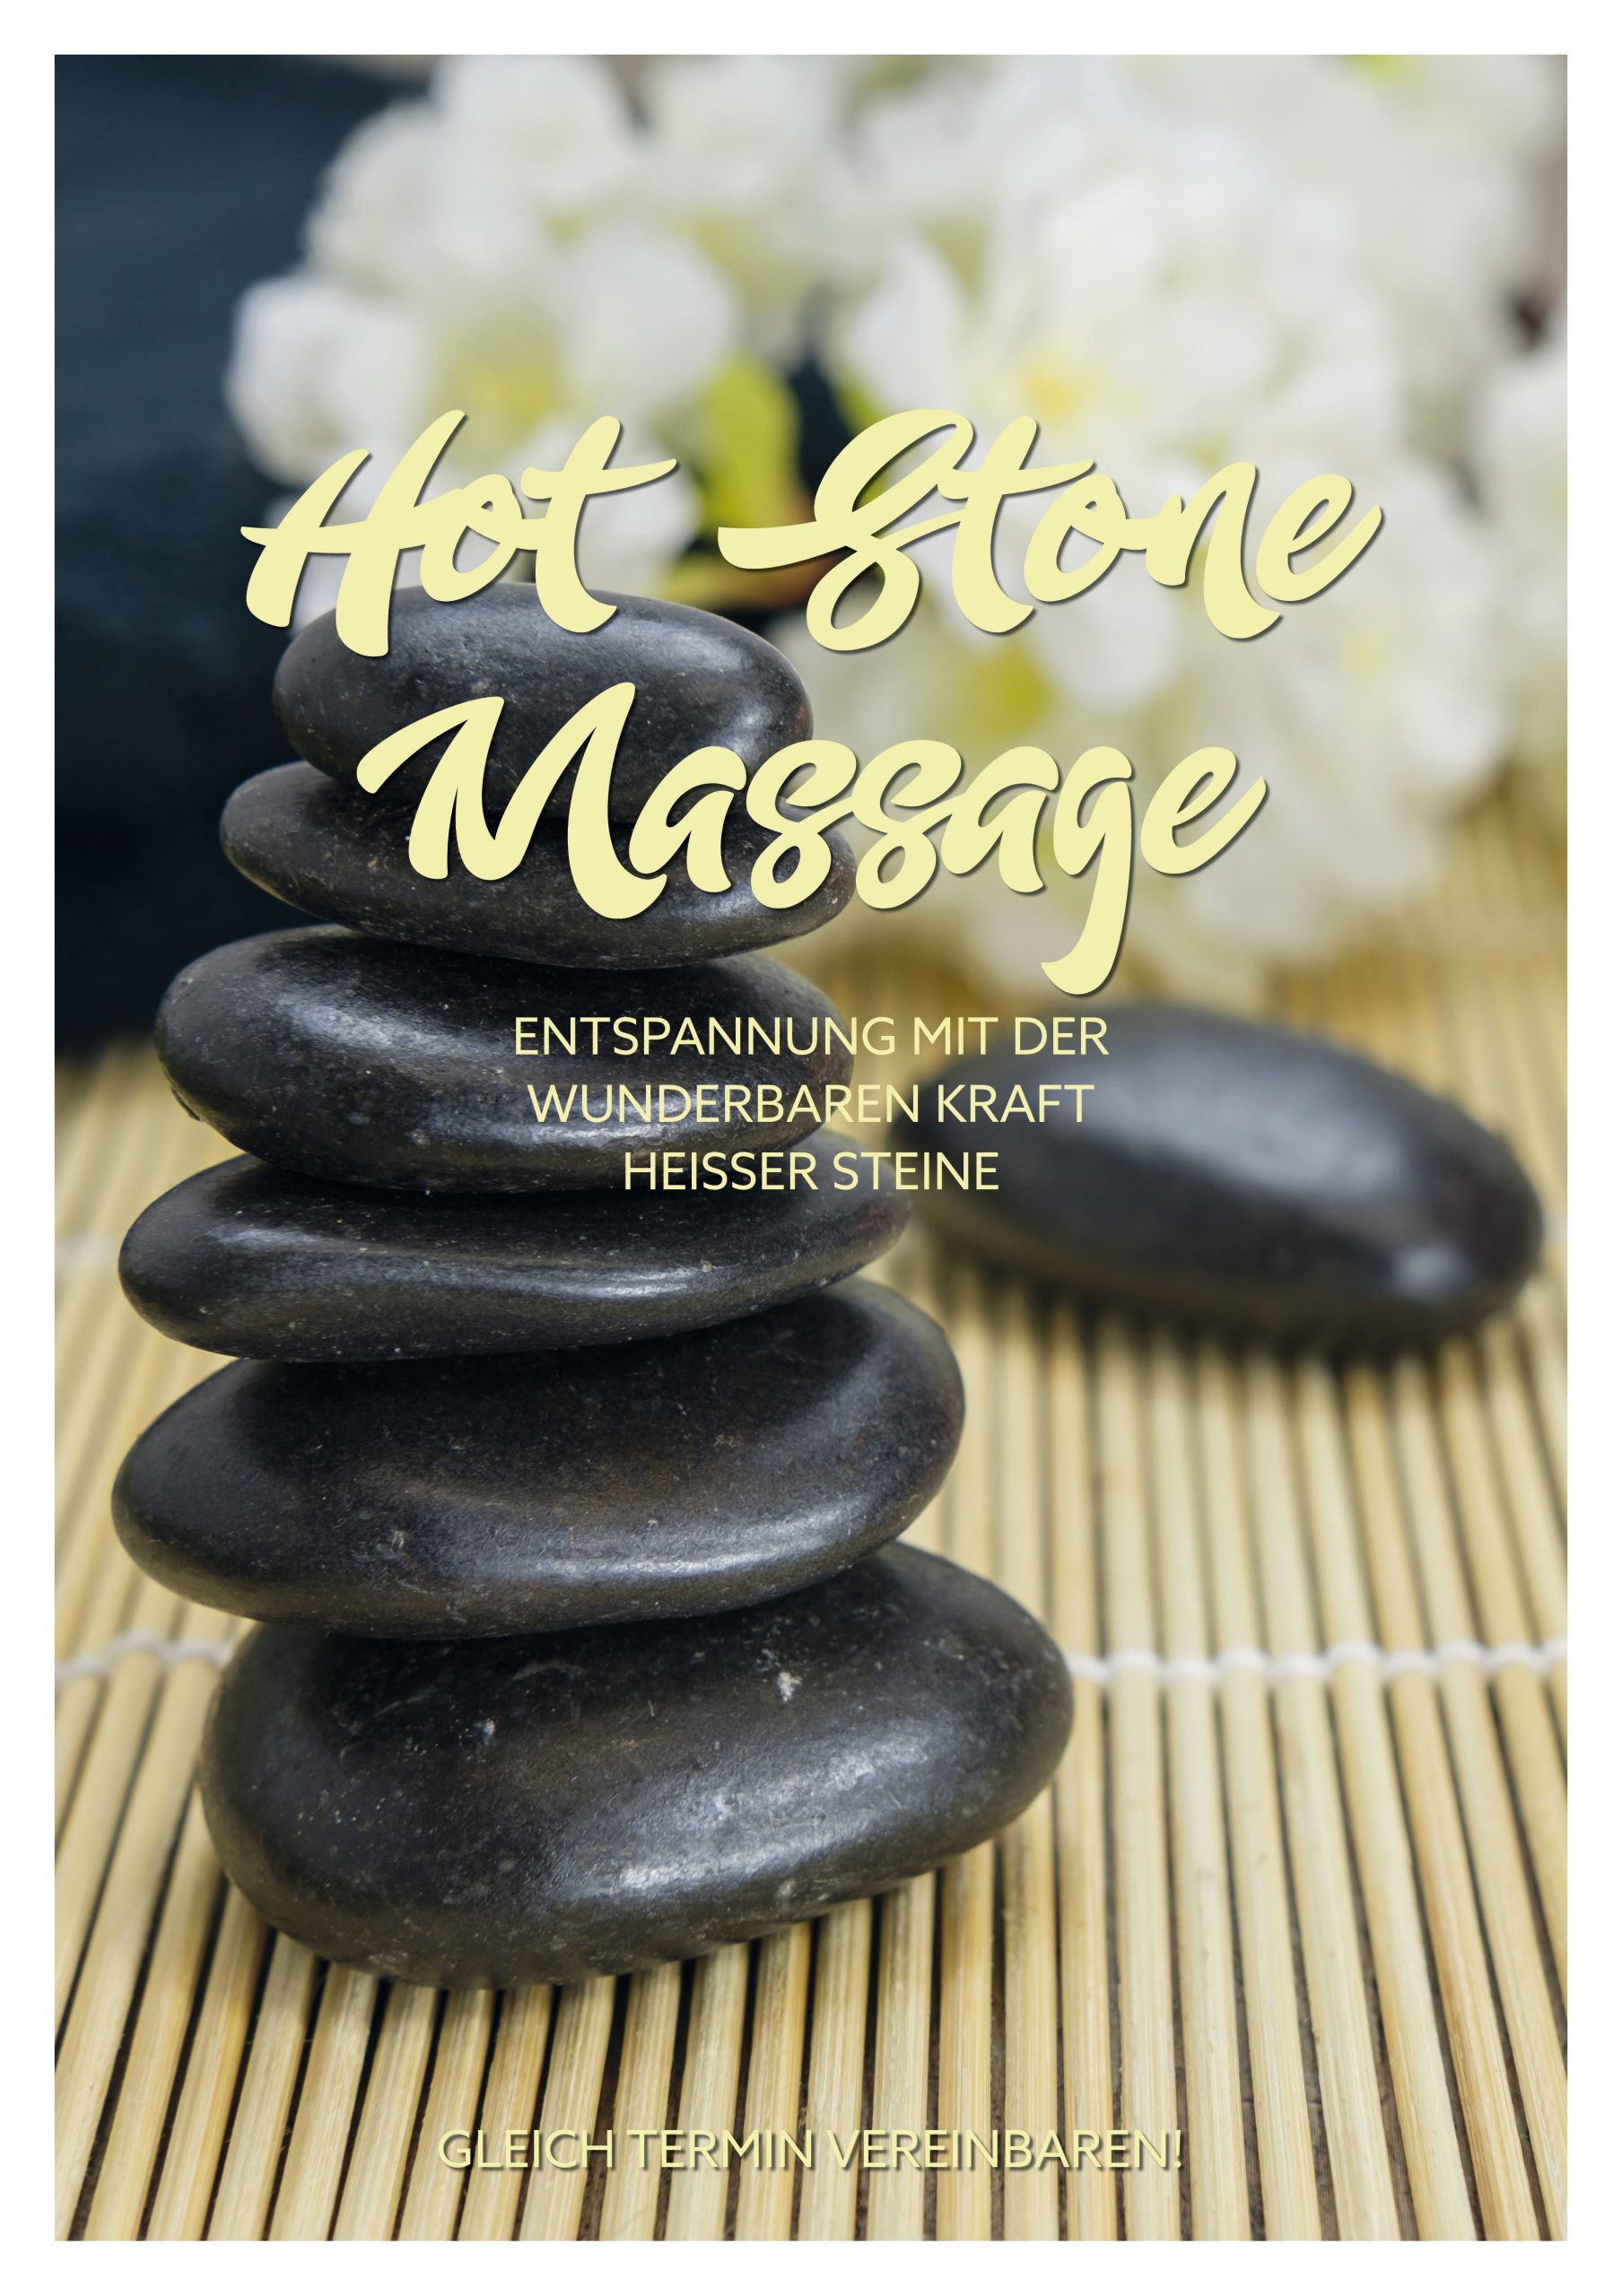 Plakat Hot Stone Massage 1 Din A1 Wellness Massage Kosmetik